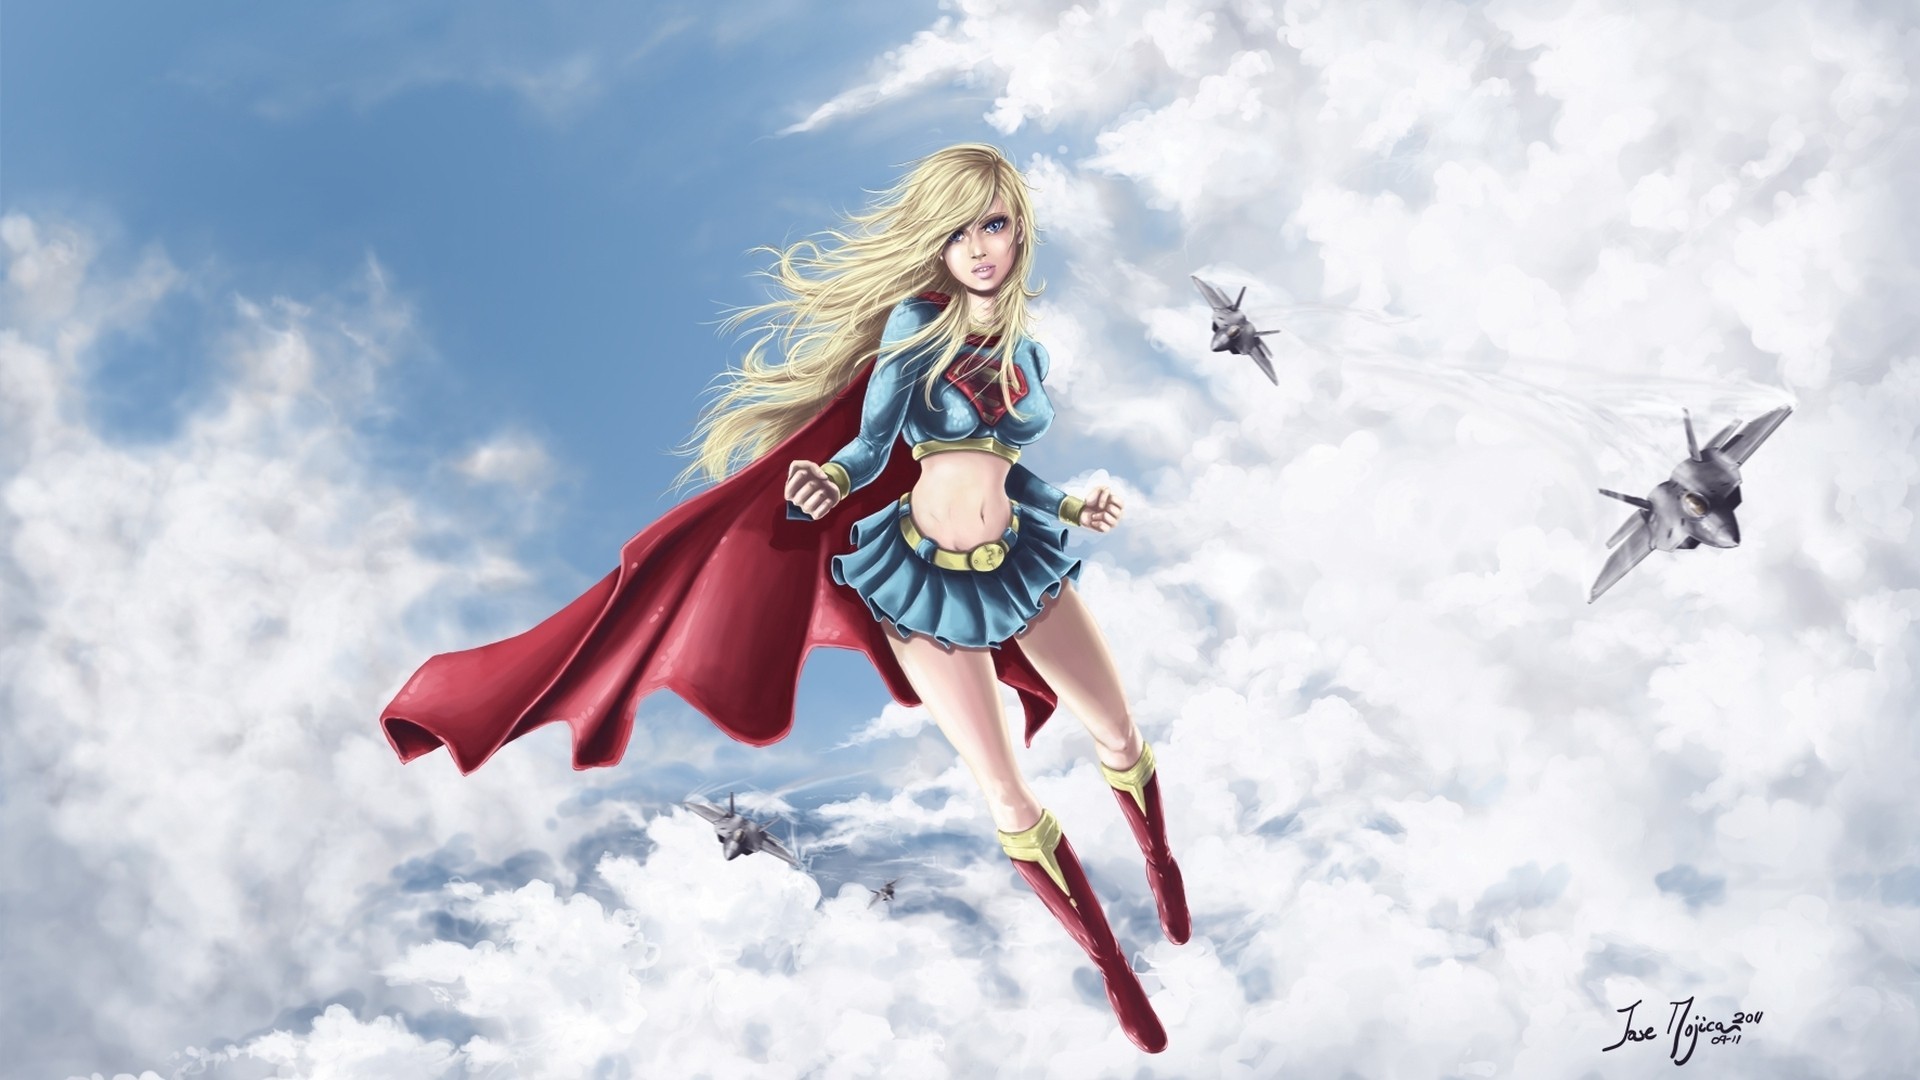 1920x1080 Download Wallpaper blondes women clouds aircraft dc comics costume  superheroes supergirl -305-56